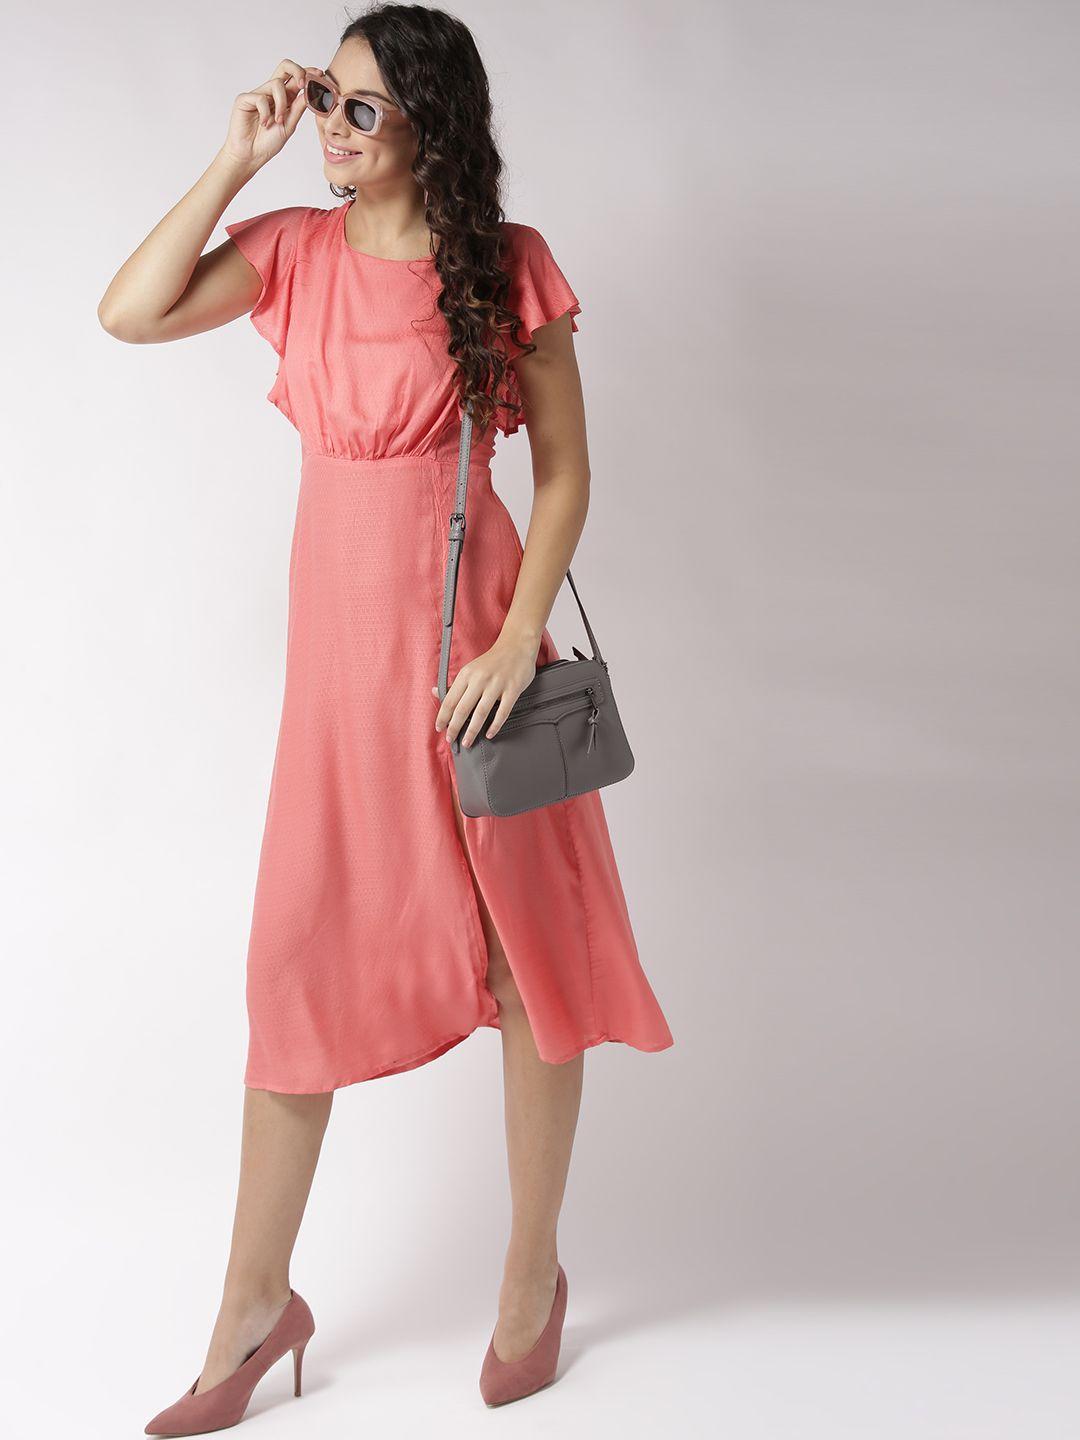 sera-women-coral-pink-self-design-empire-dress